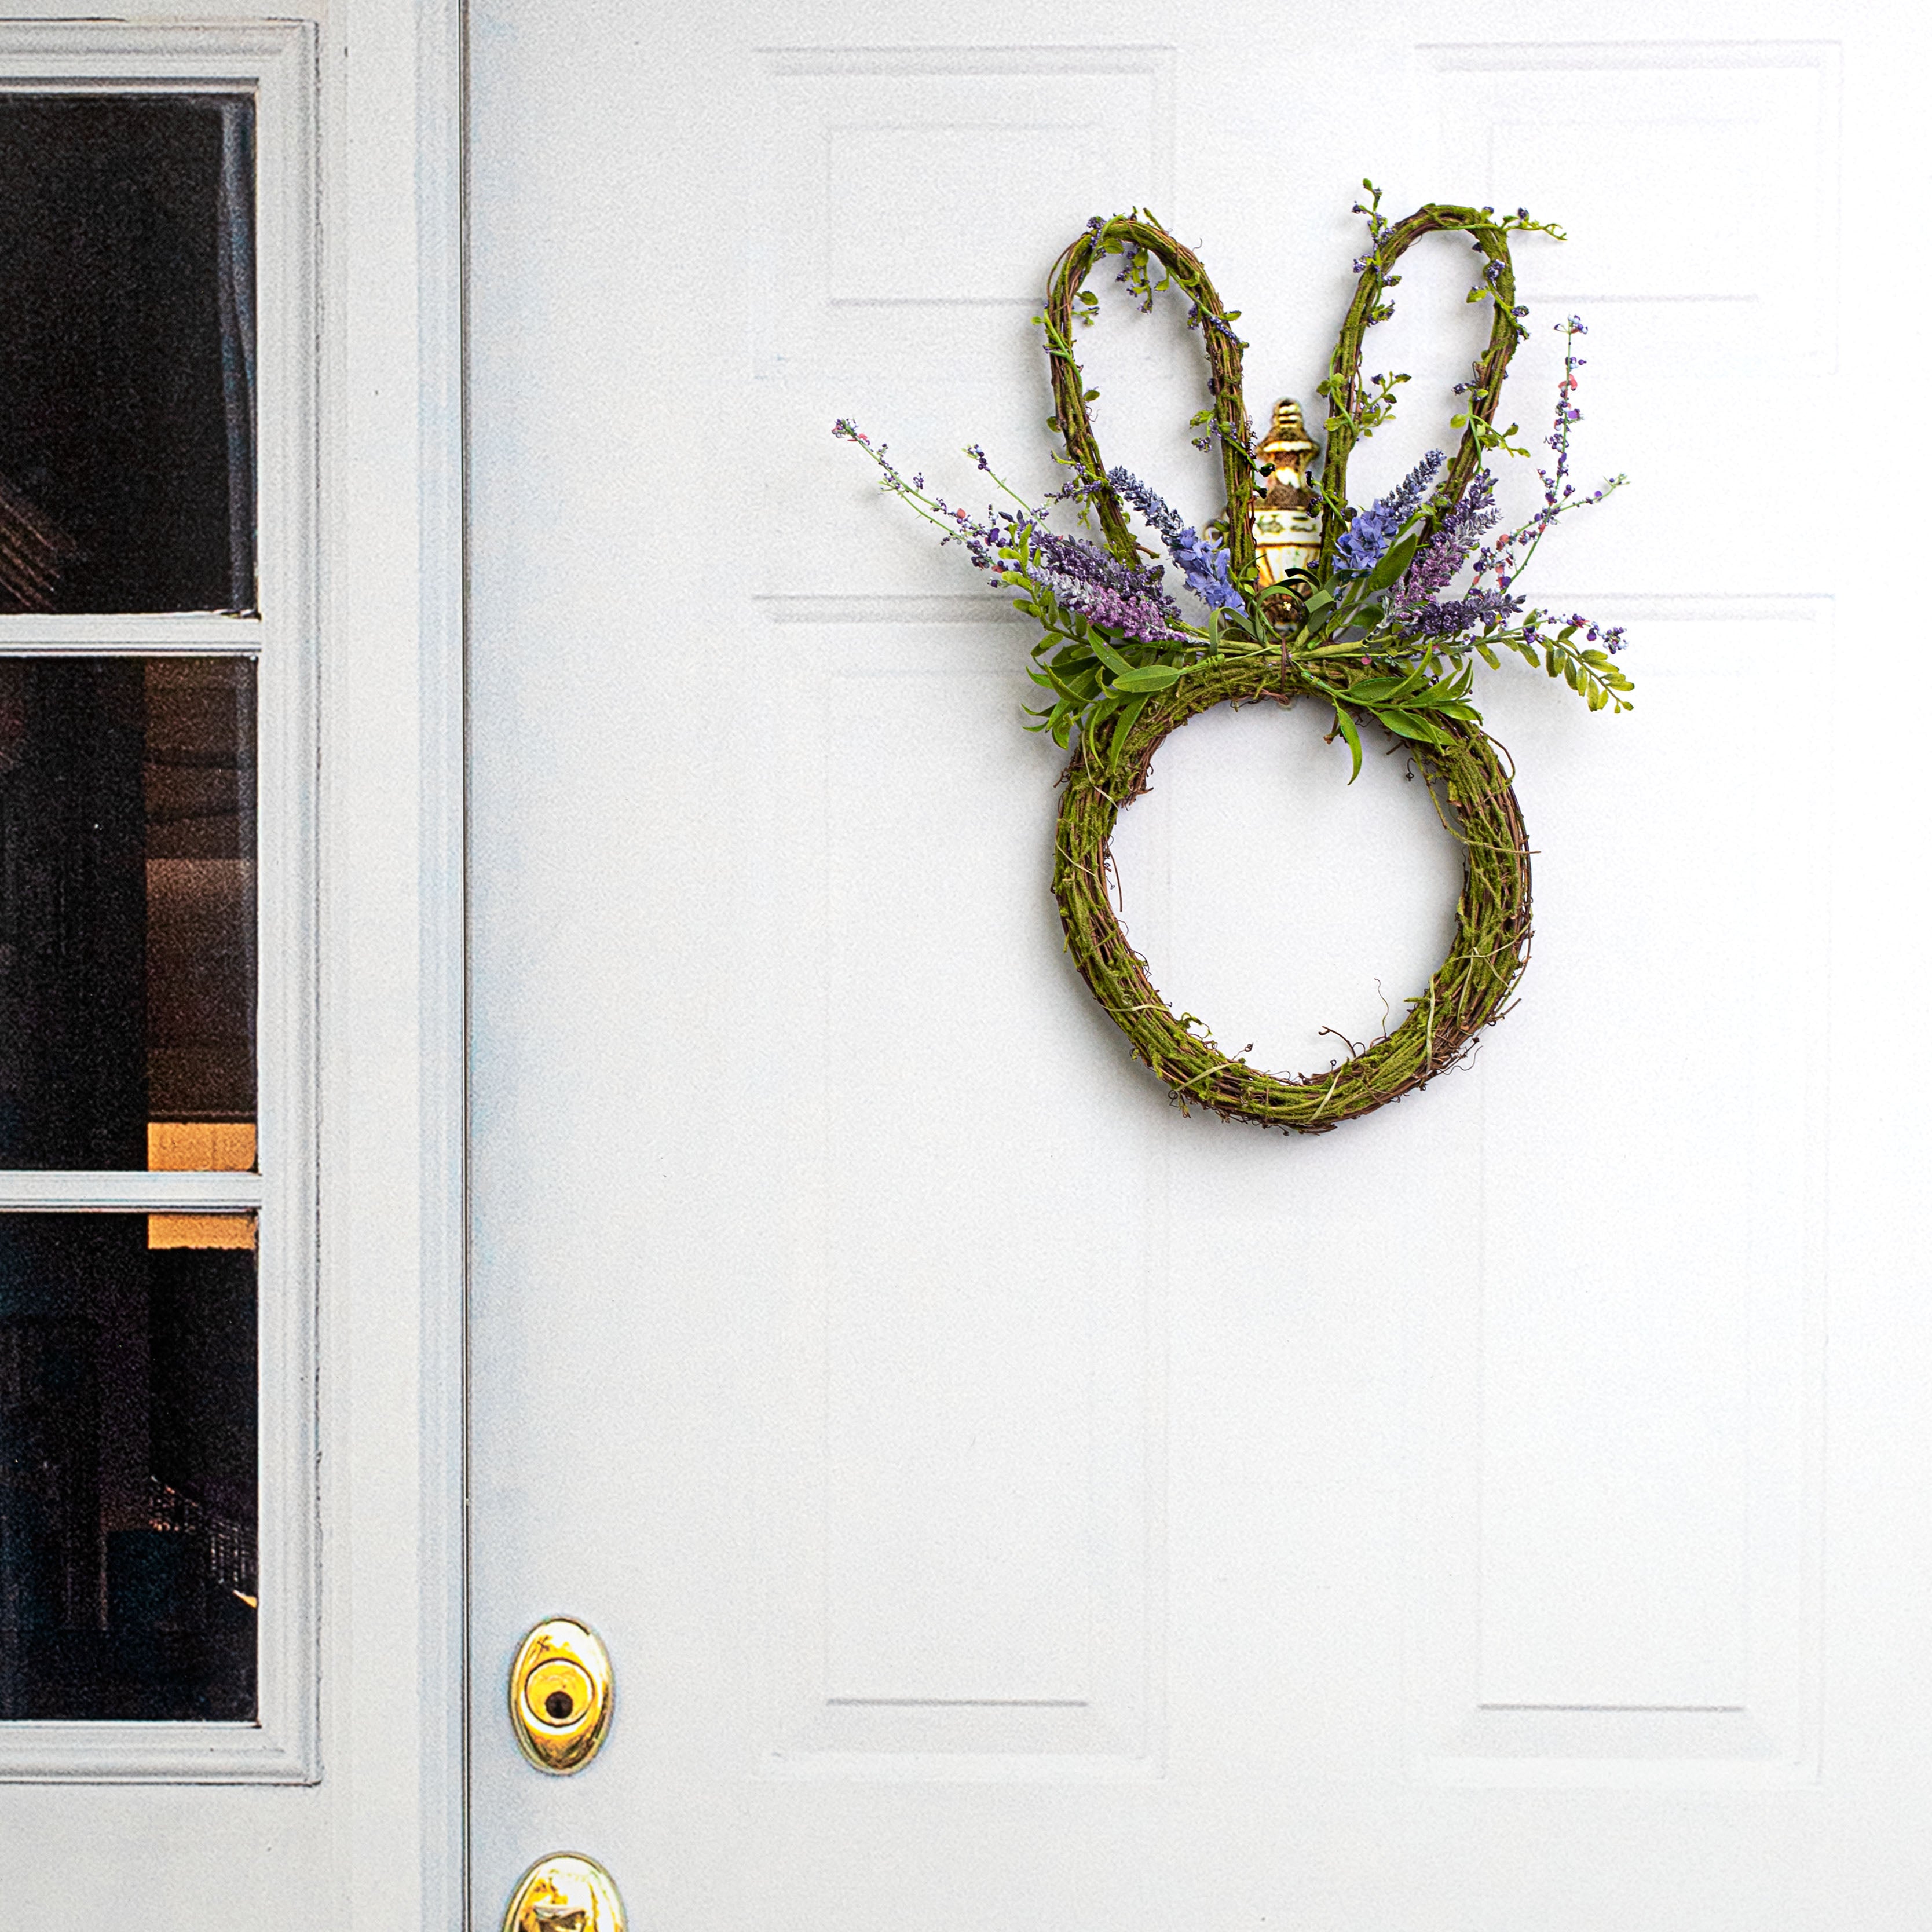 19.5" Twig Bunny Wreath with Lavender